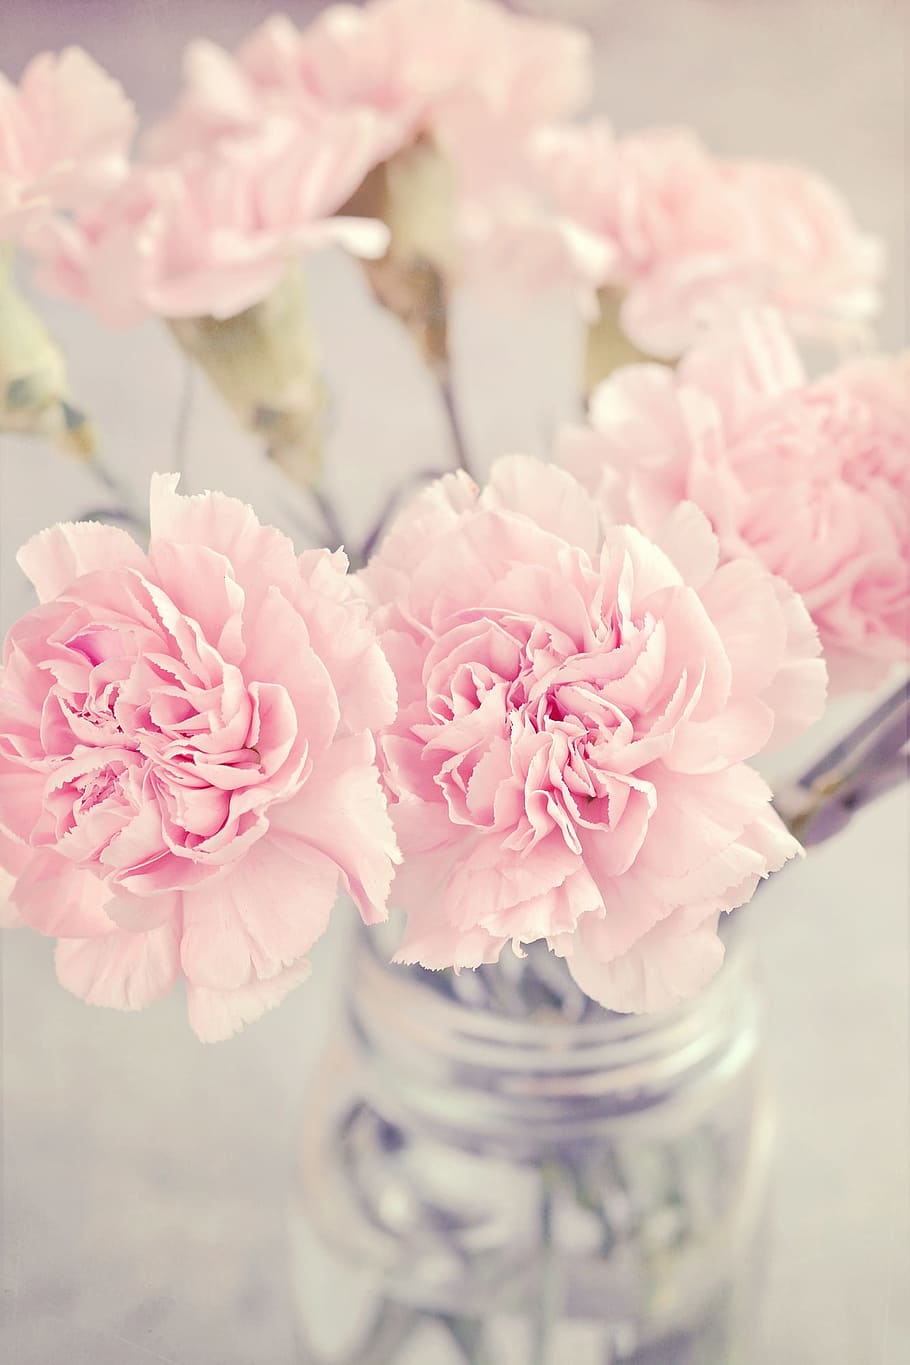 selektif, foto fokus, merah muda, bunga peony, vas, cengkeh, bunga, bunga merah muda, anyelir merah muda, lembut